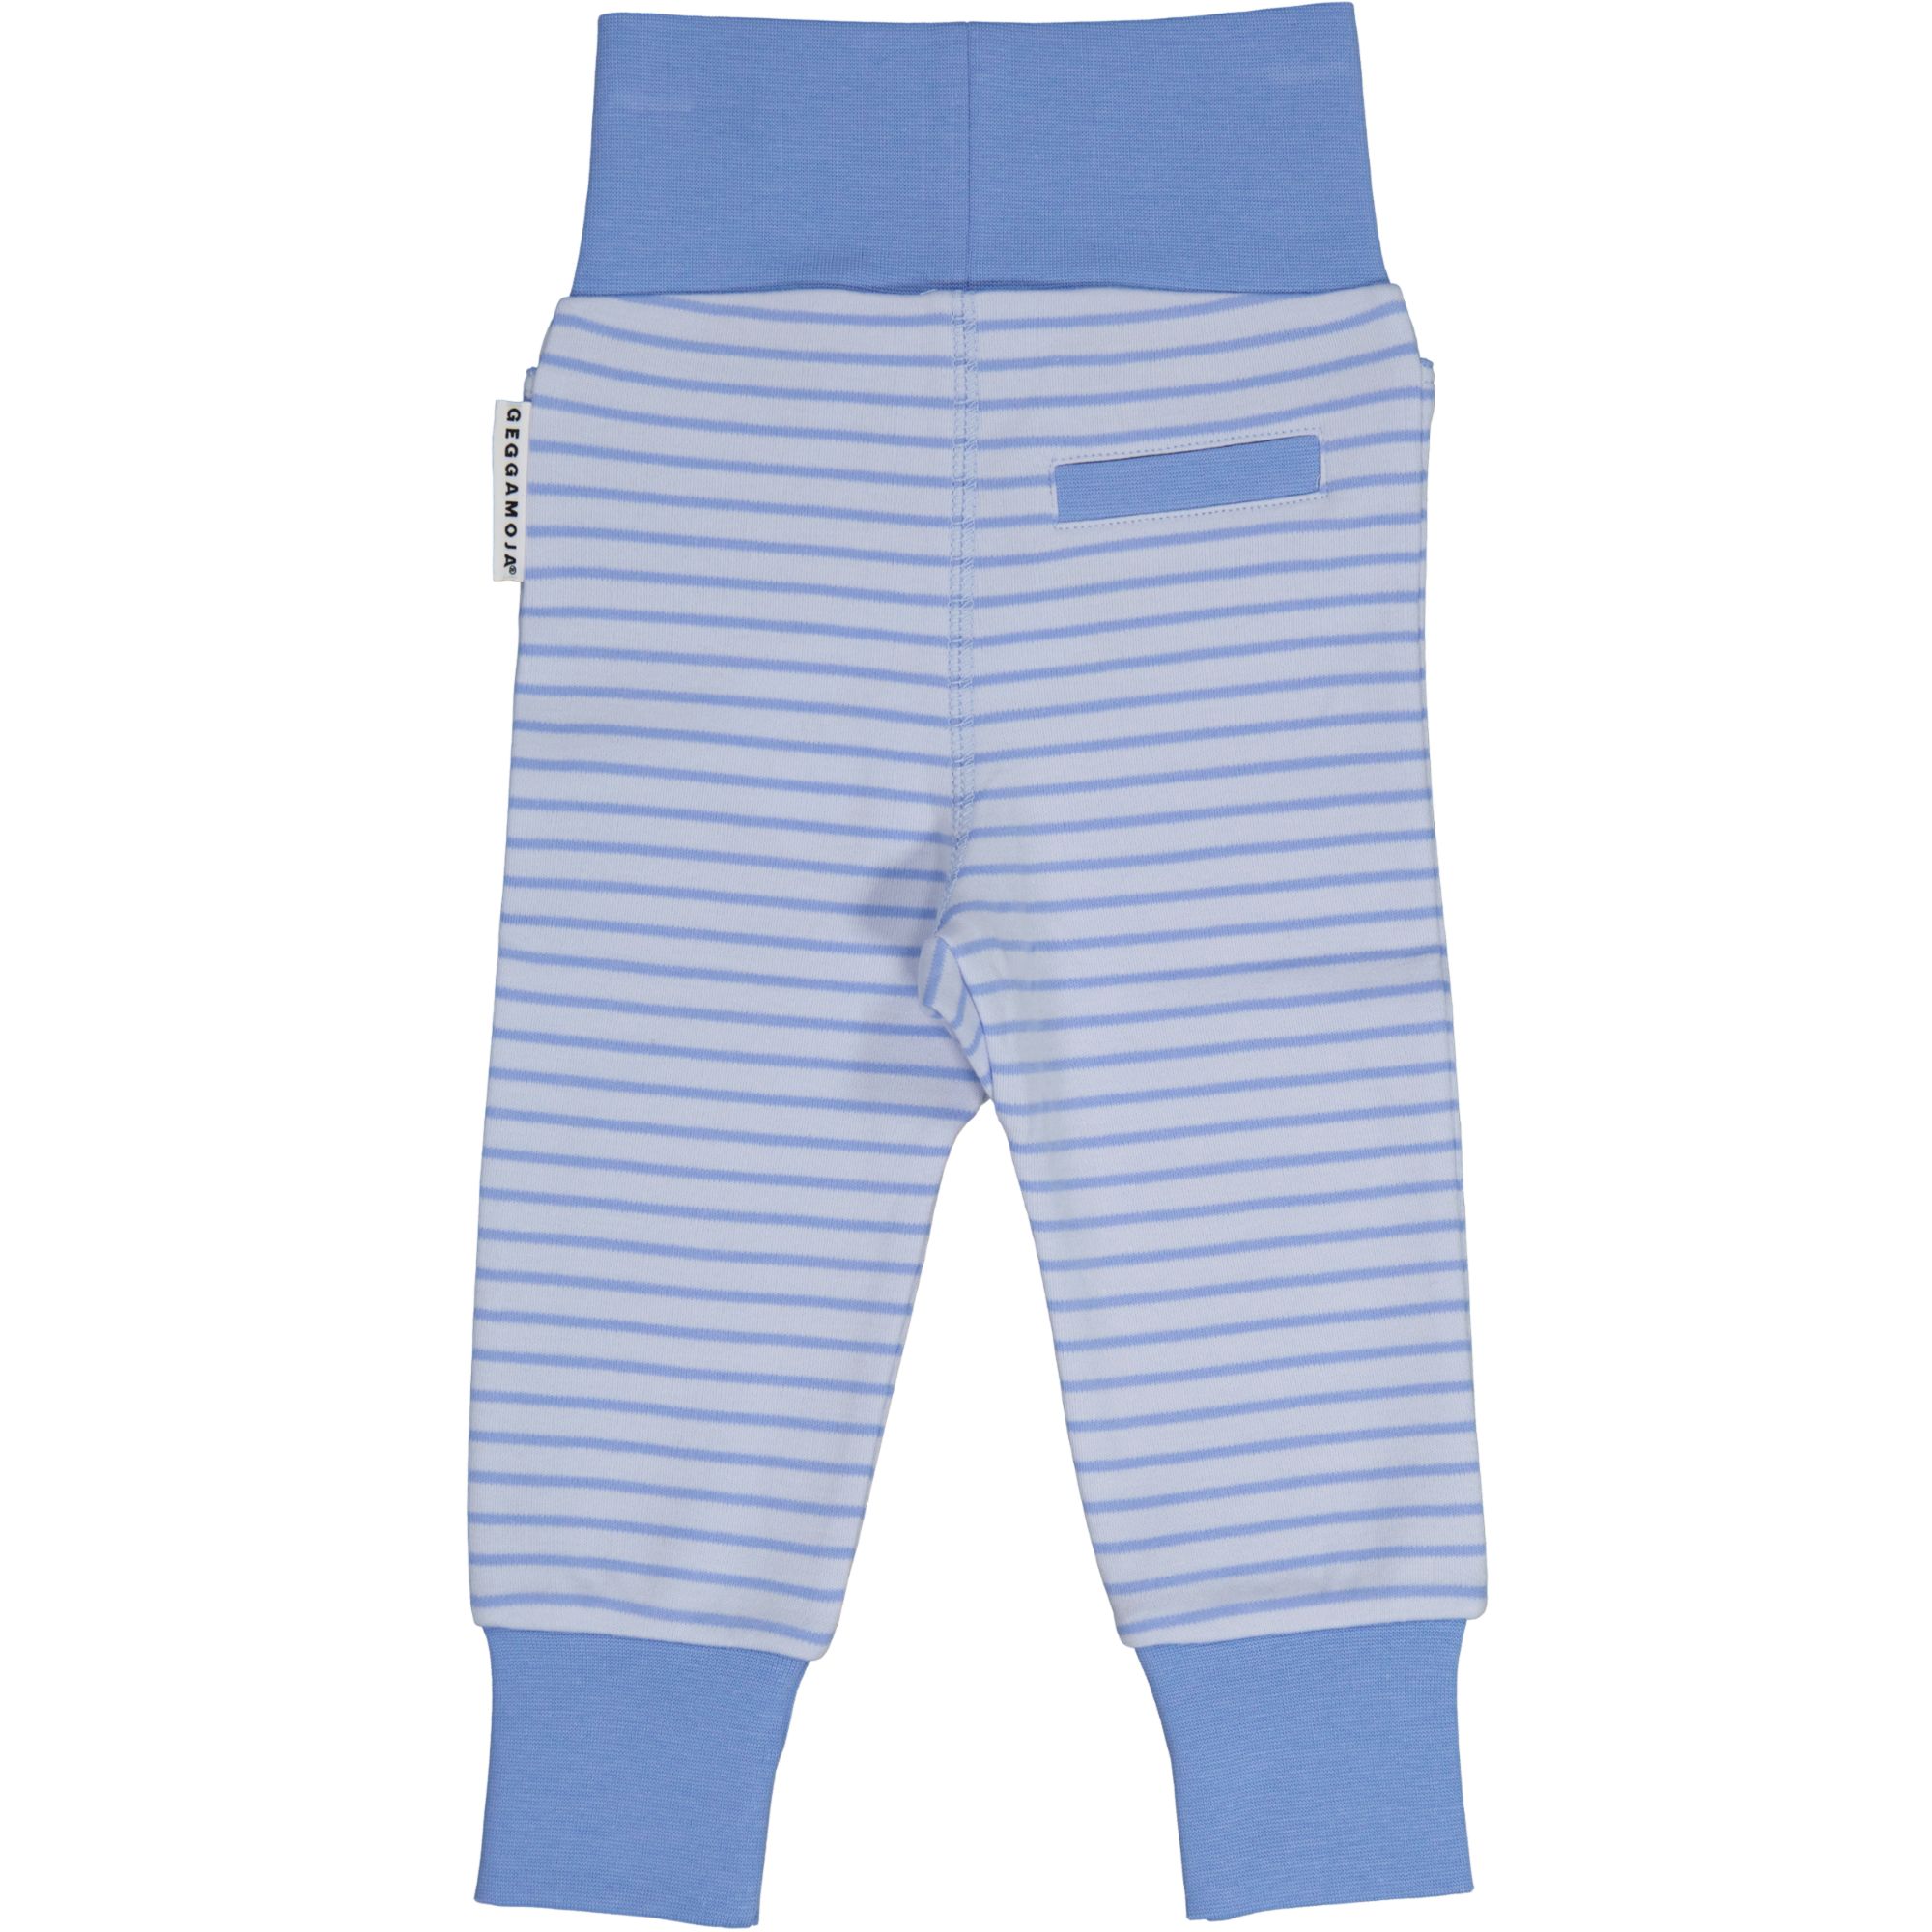 Baby pants Light blue/blue